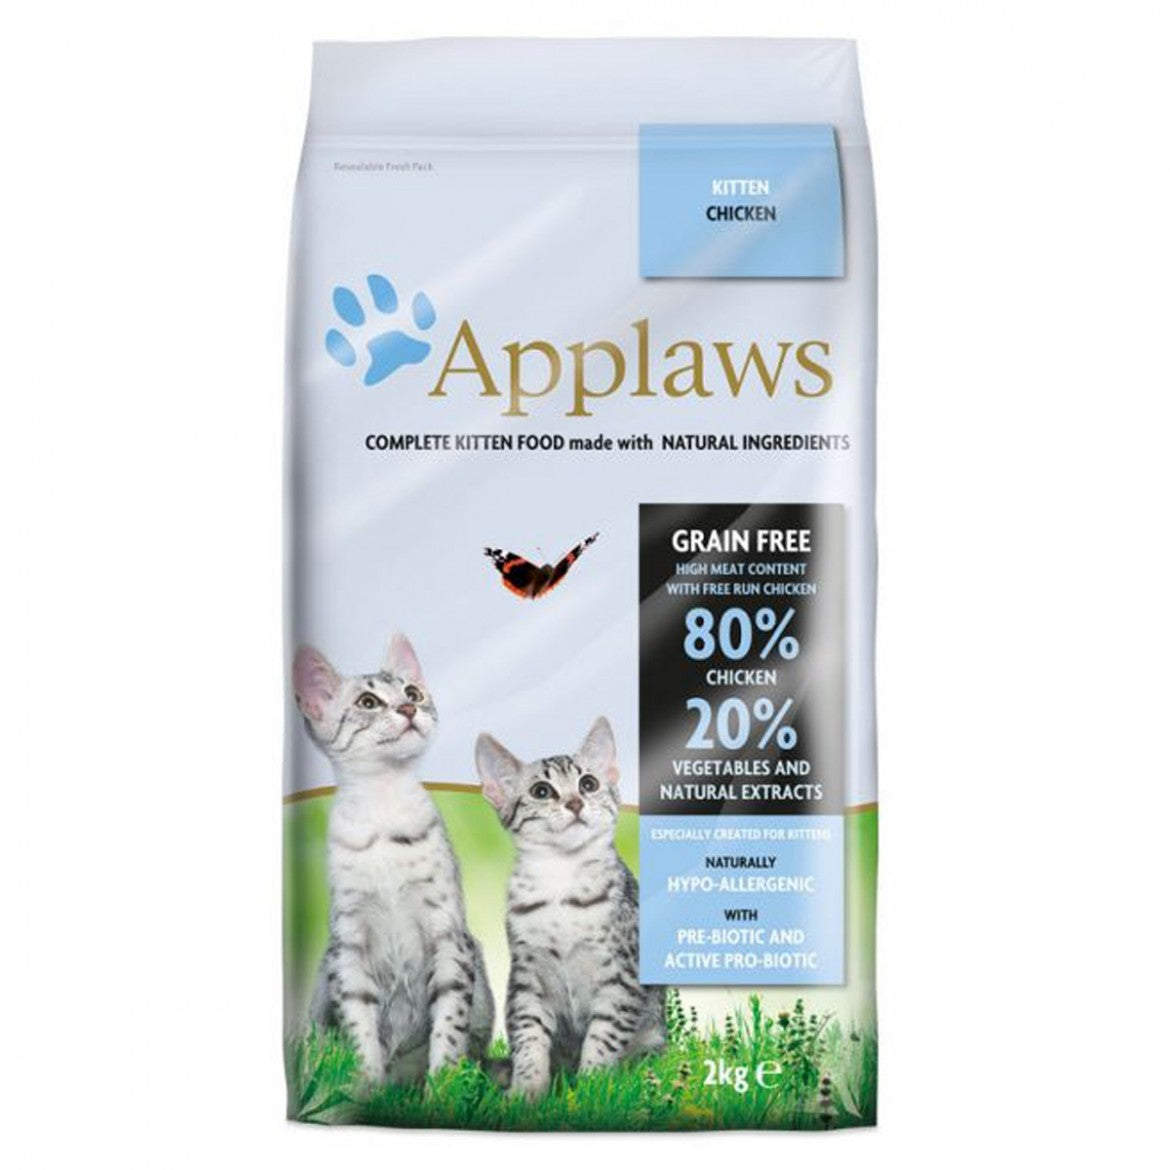 Applaws Cat Food - Kitten Chicken 2kg